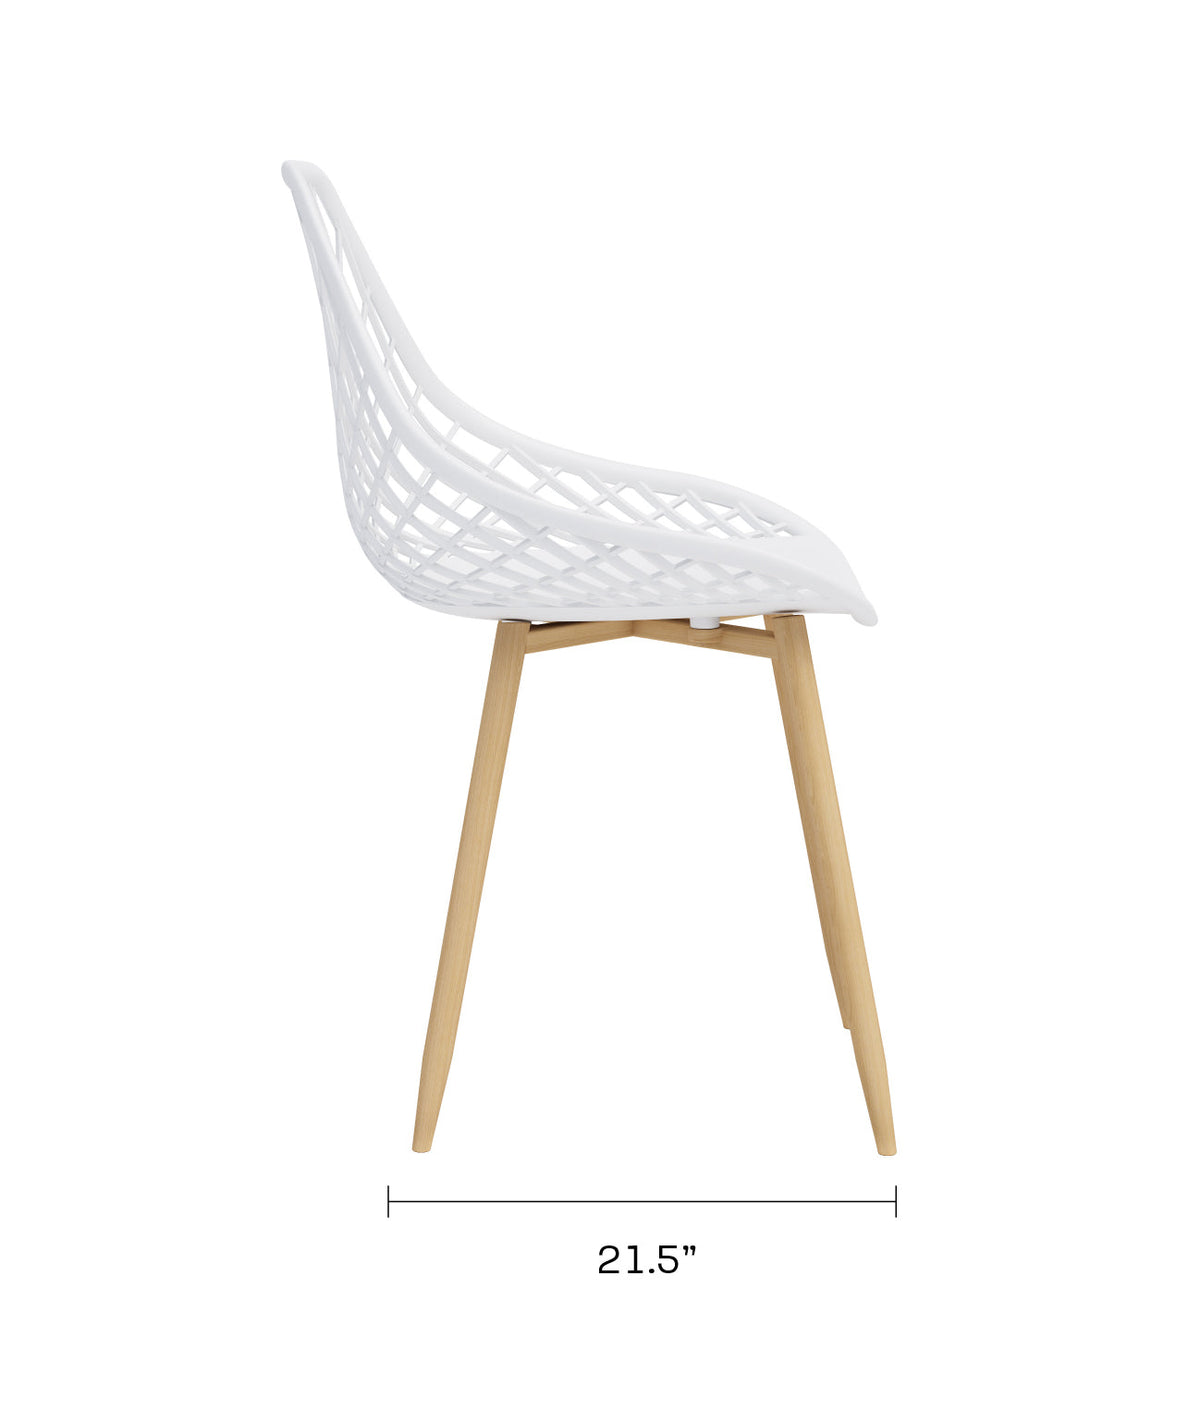 Kurv™ Cafe Table + Kurv™ Dining Chair - Set of 2